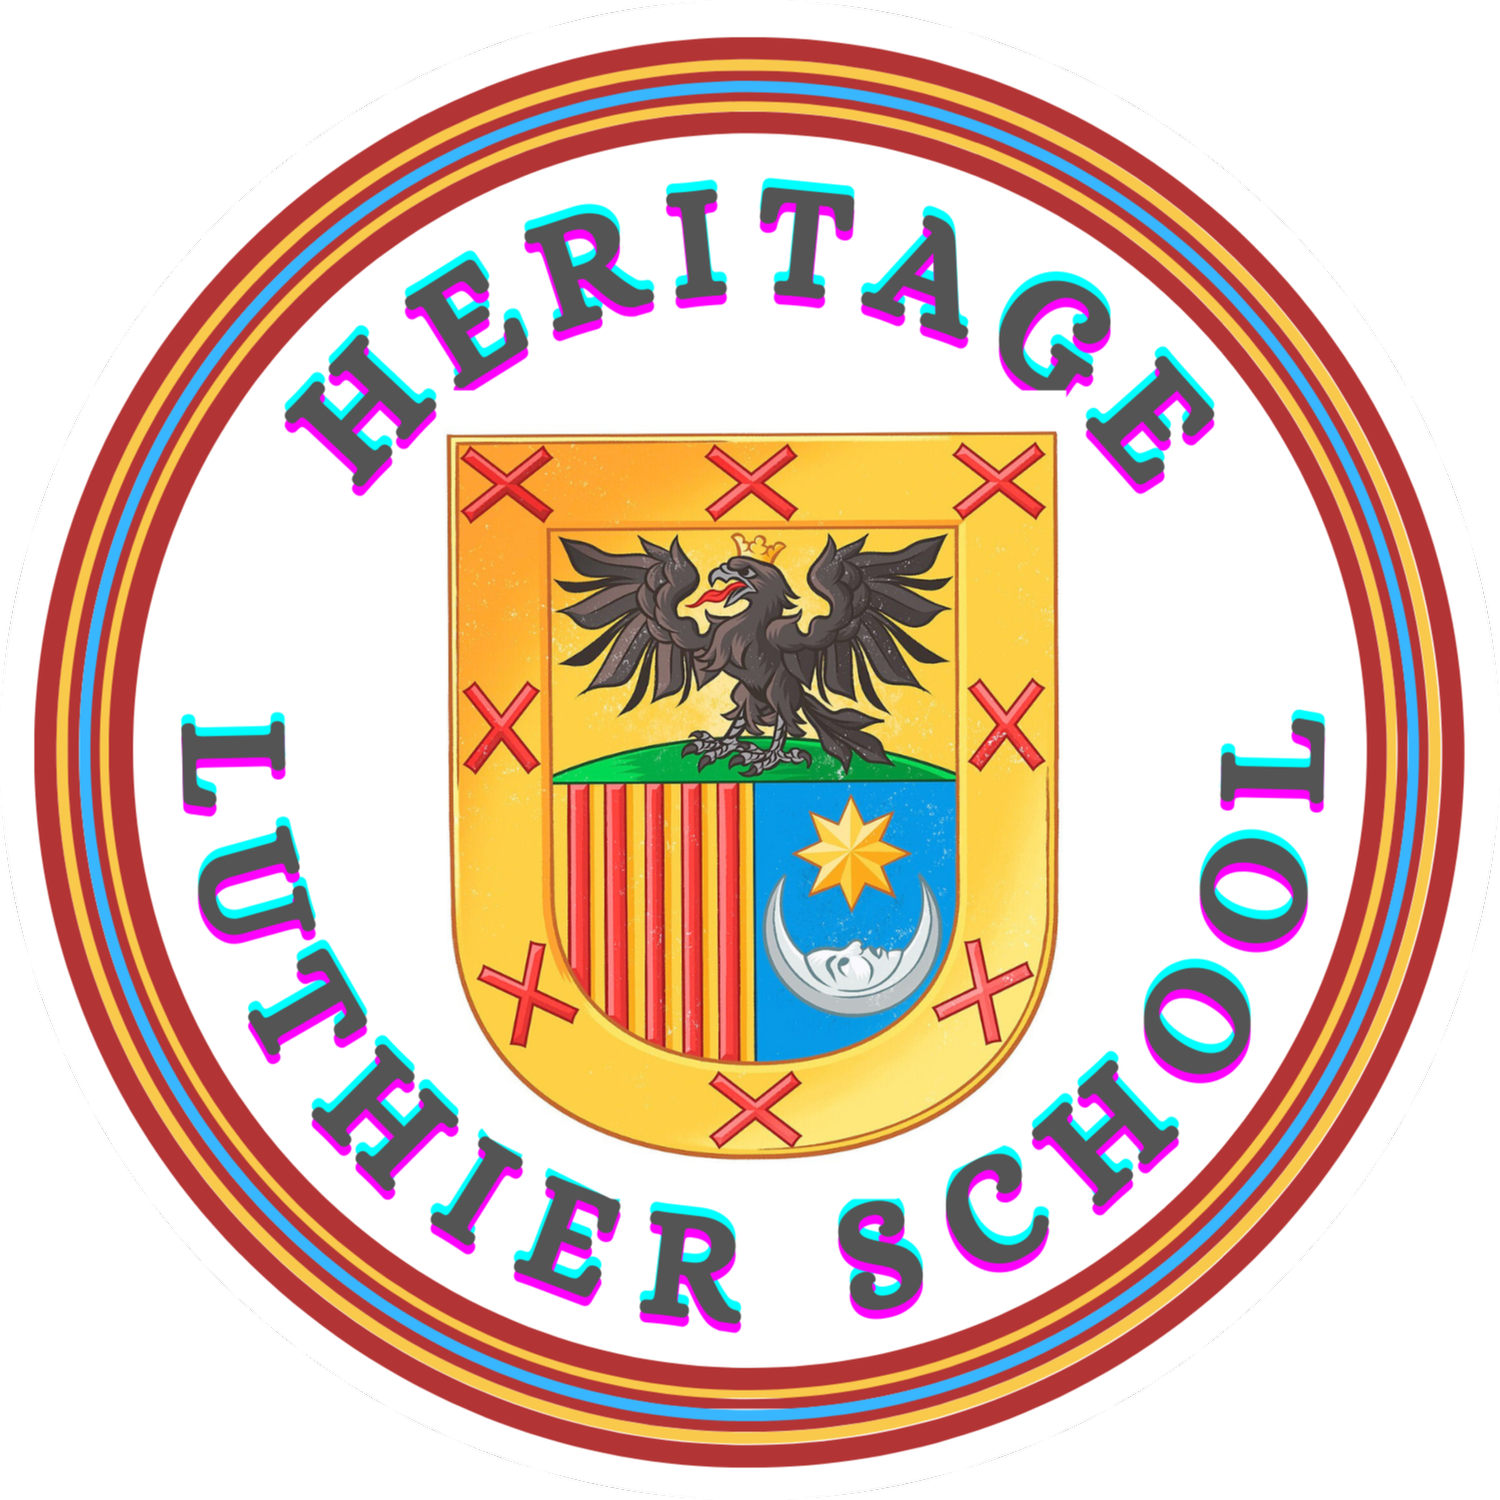 Heritage Luthier School